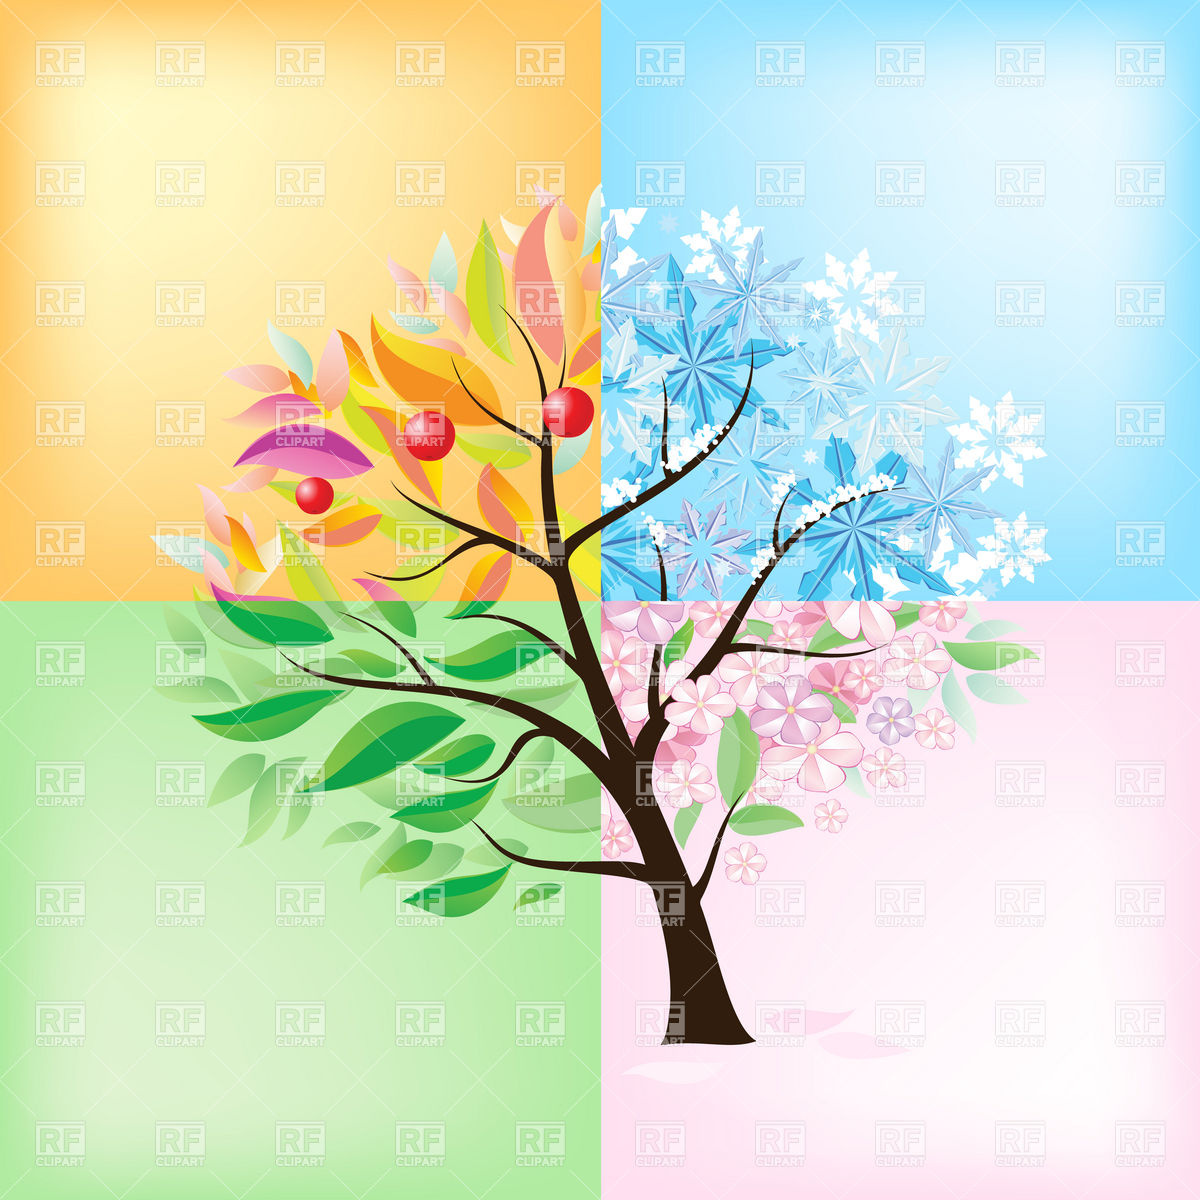 Four Seasons Tree Clip Art